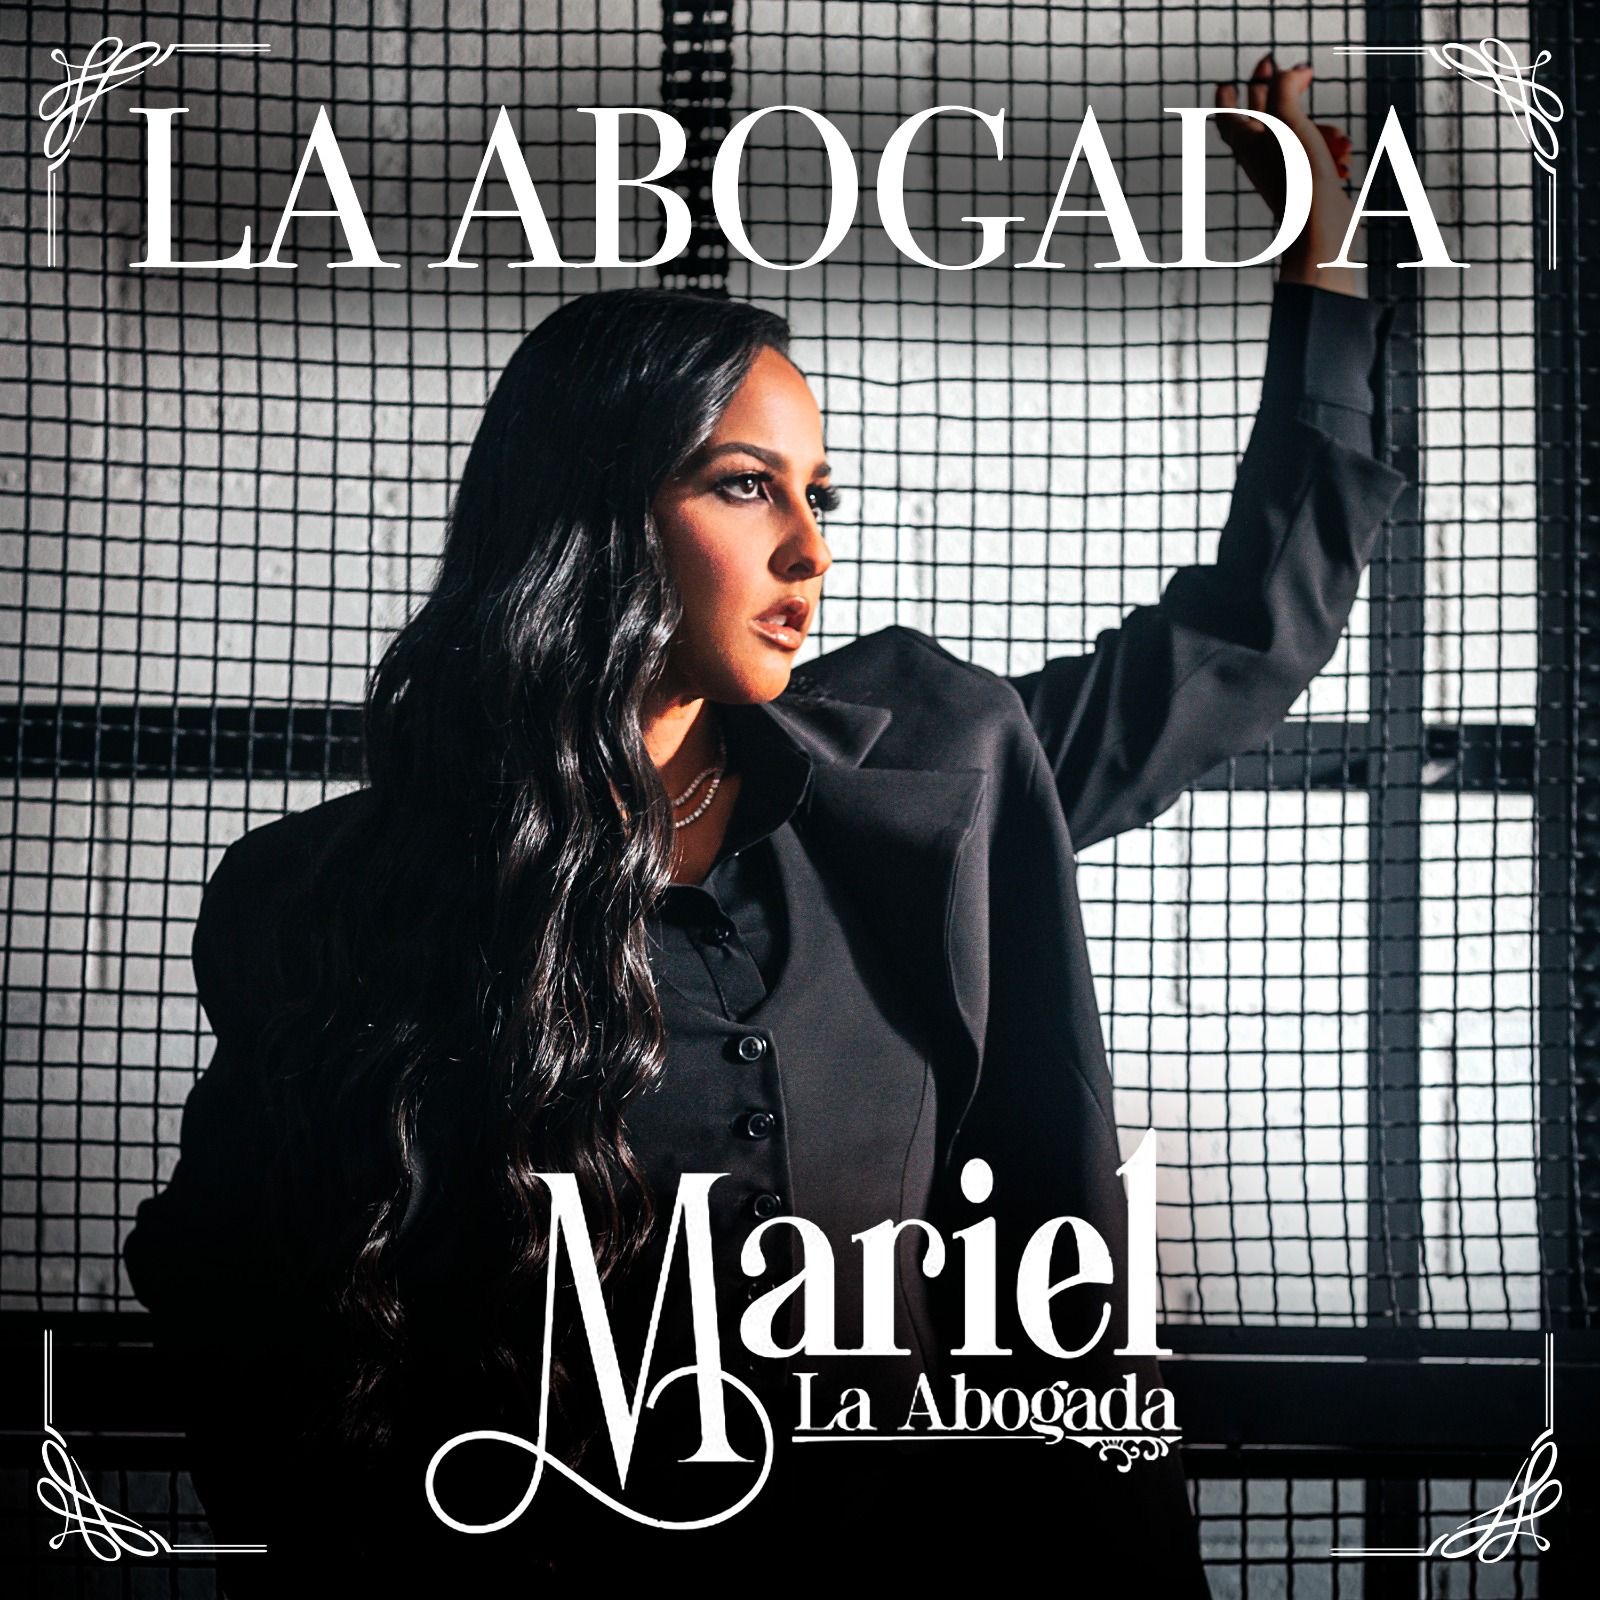 MARIEL, La Abogada, se lanza como canten de música regional mexicana